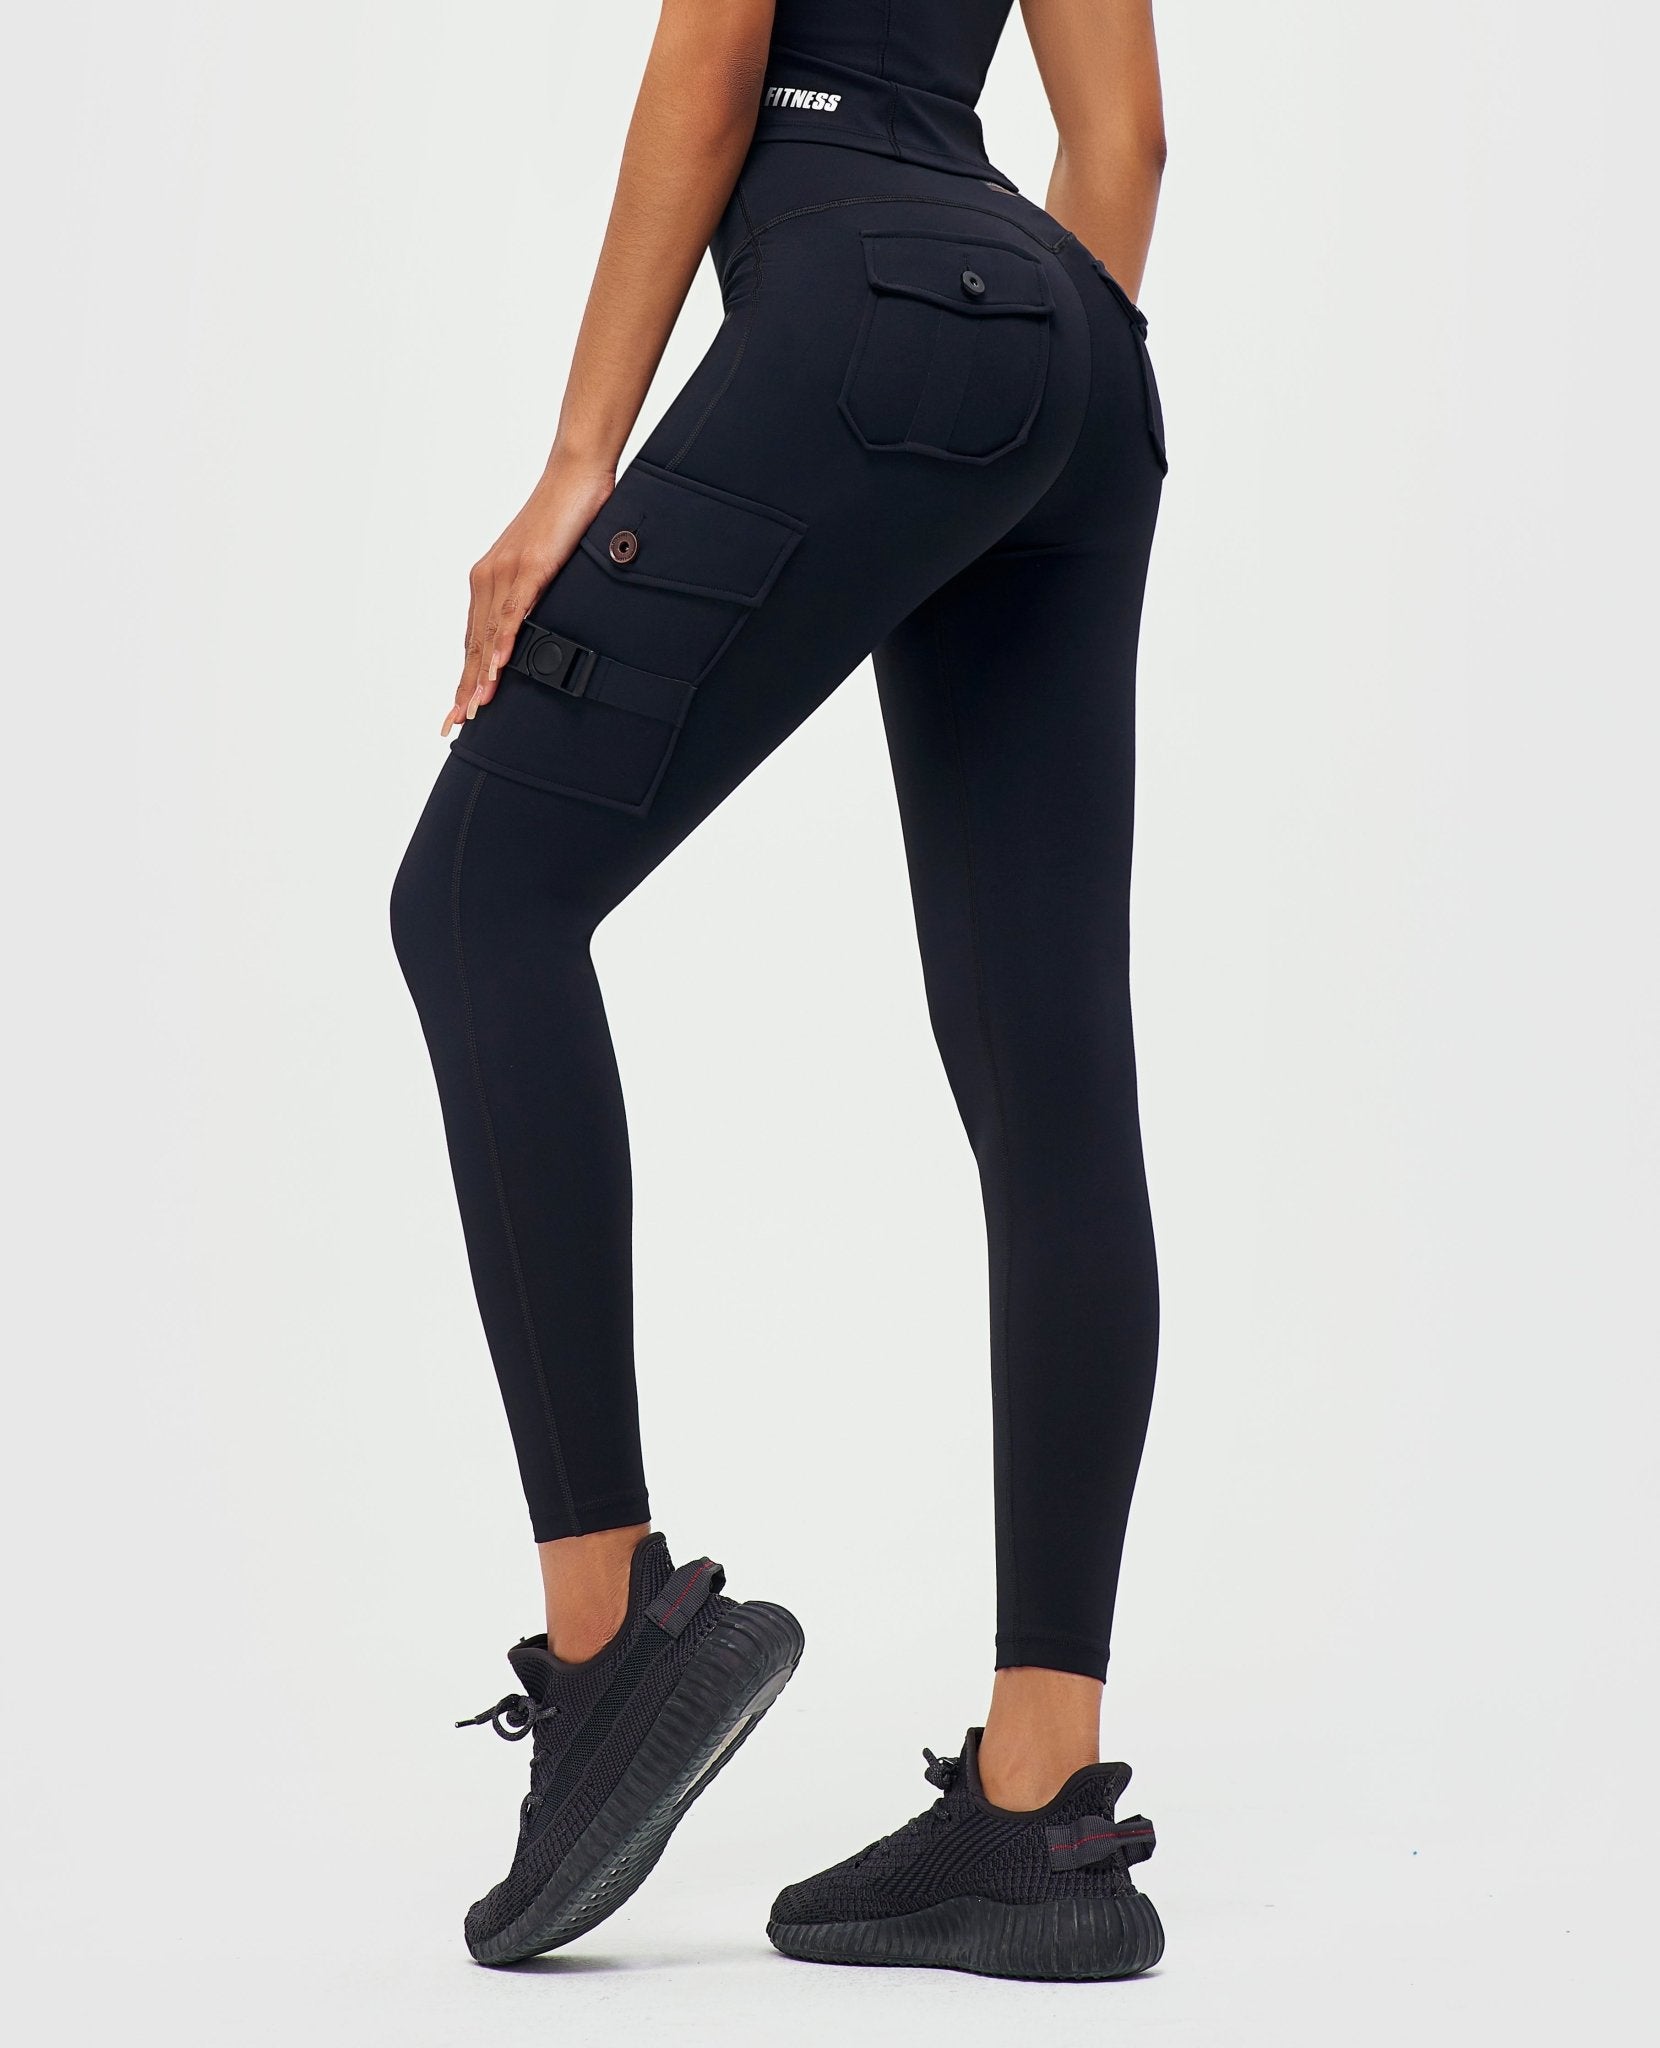 Solo Cargo Leggings - Black  Cargo leggings, Workout pants women, Gym  pants women